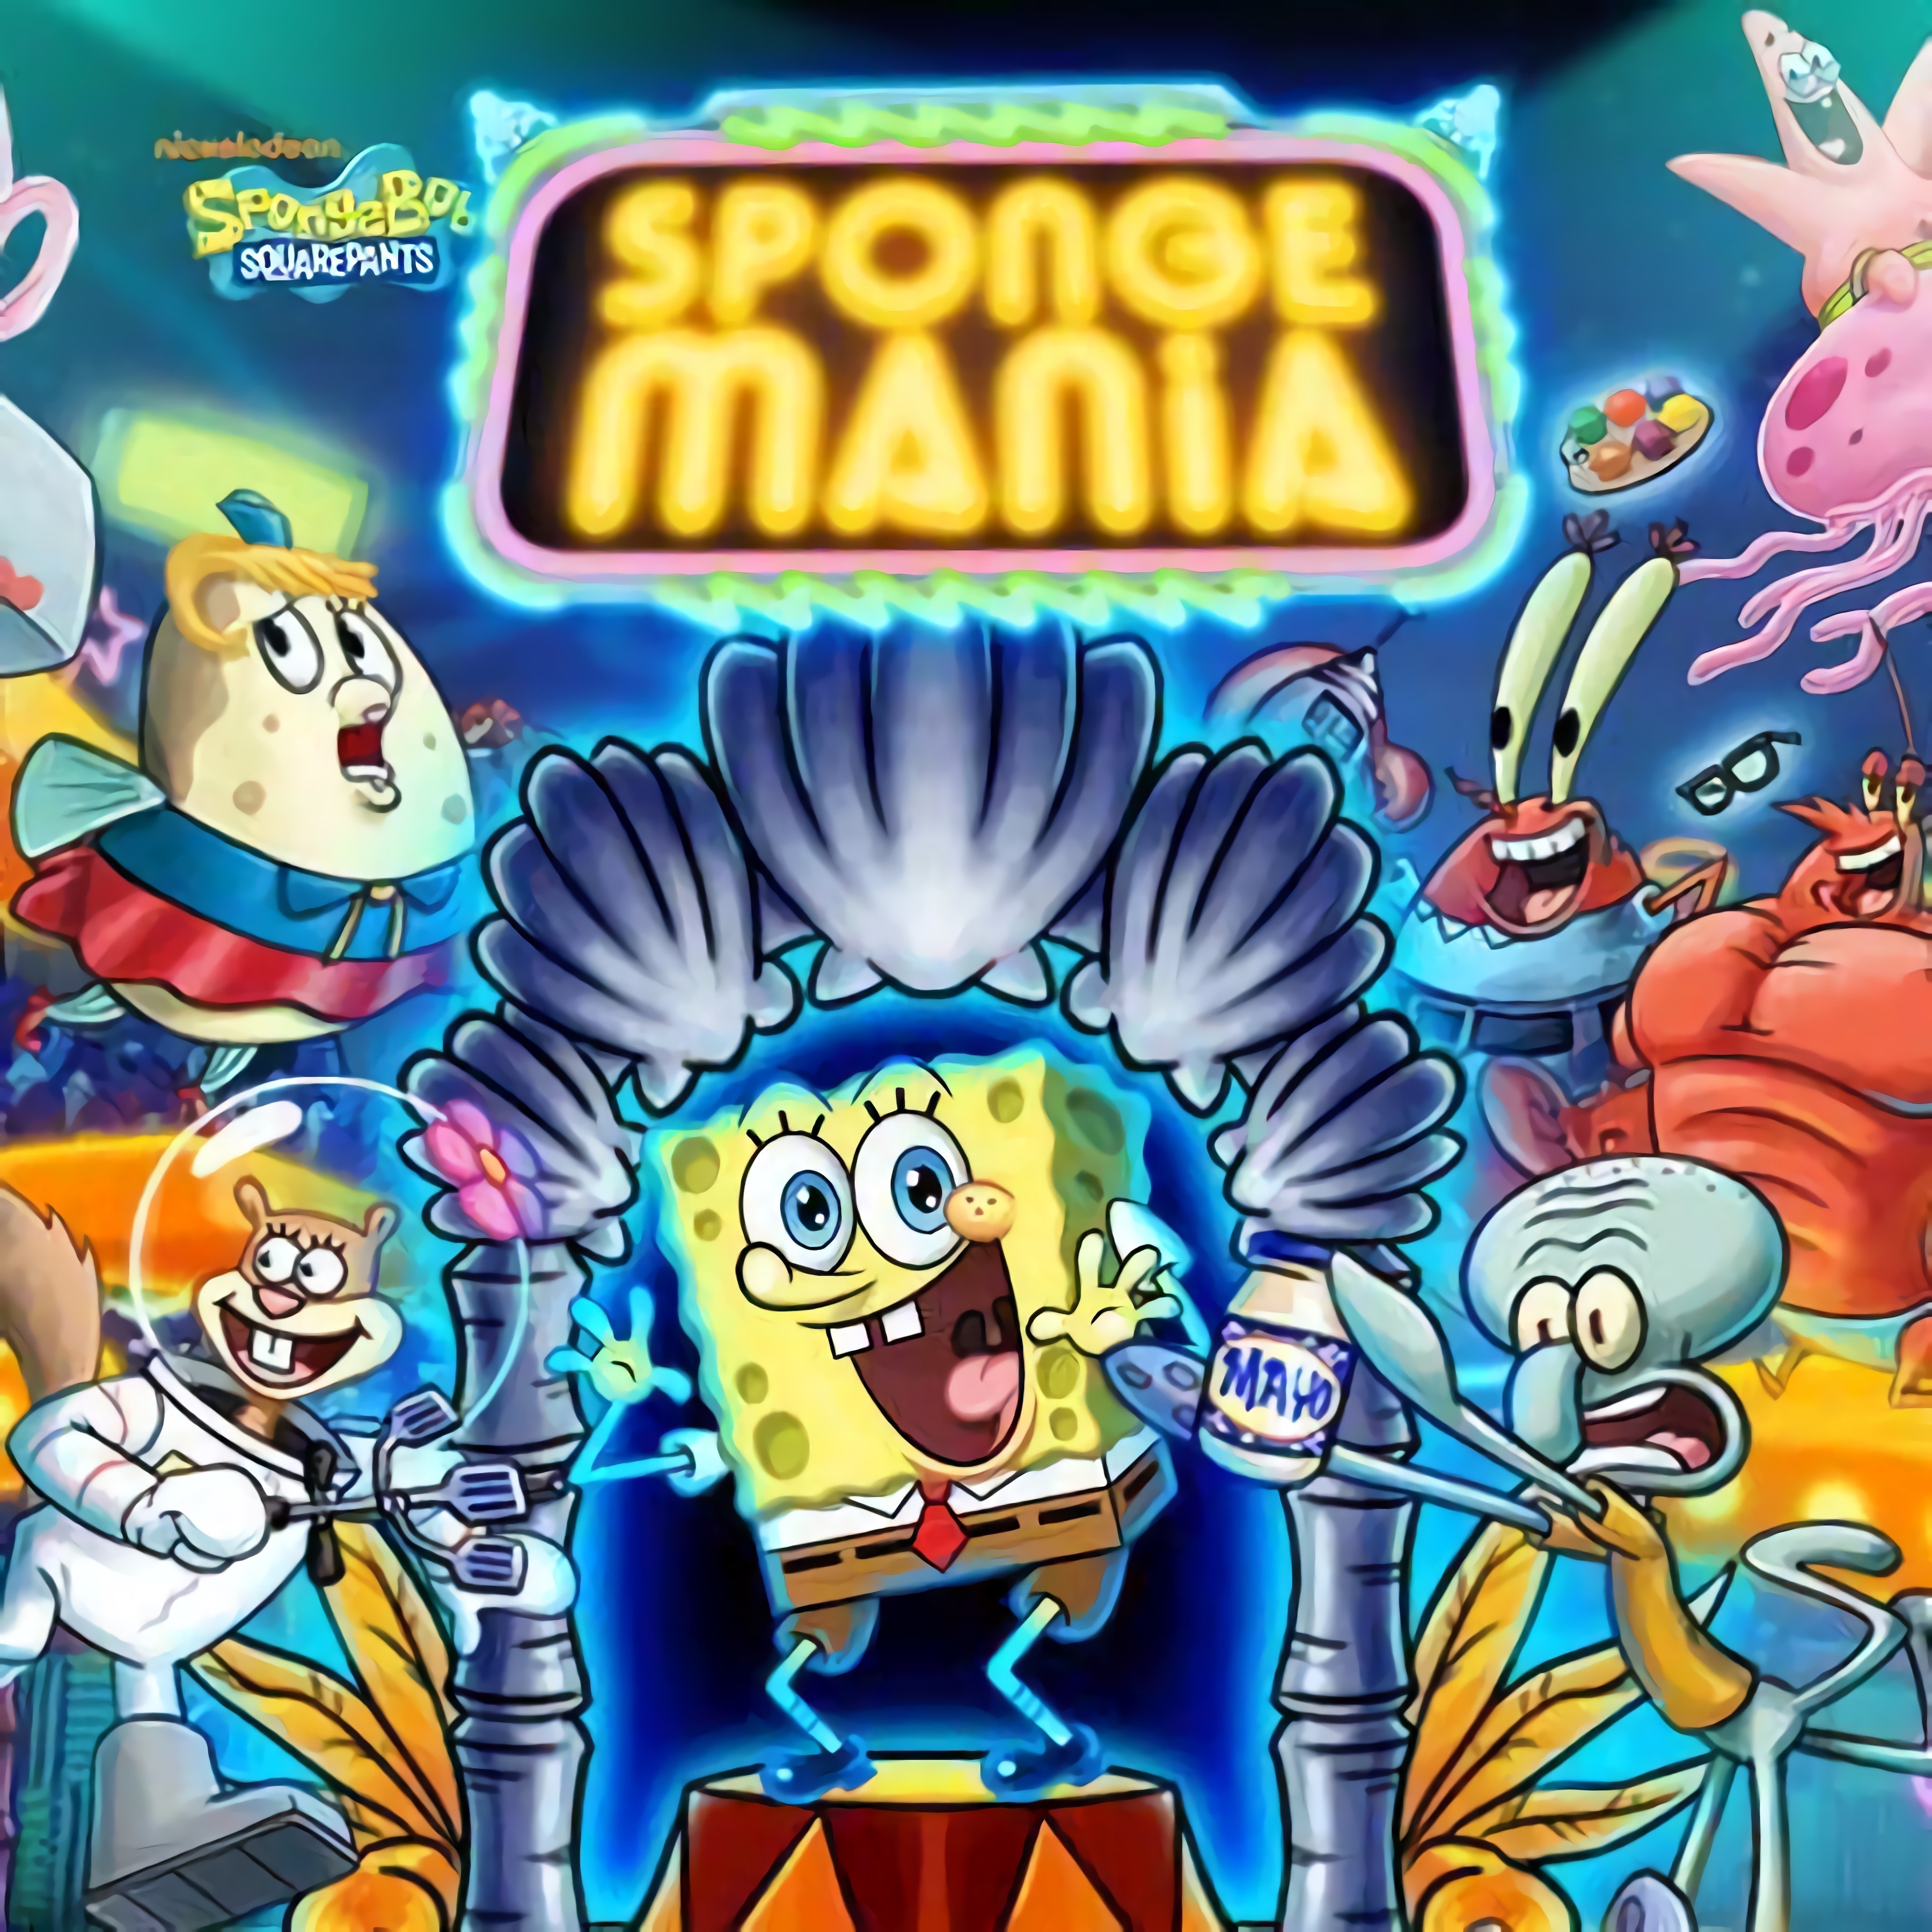 SpongeBob SquarePants: SpongeMania